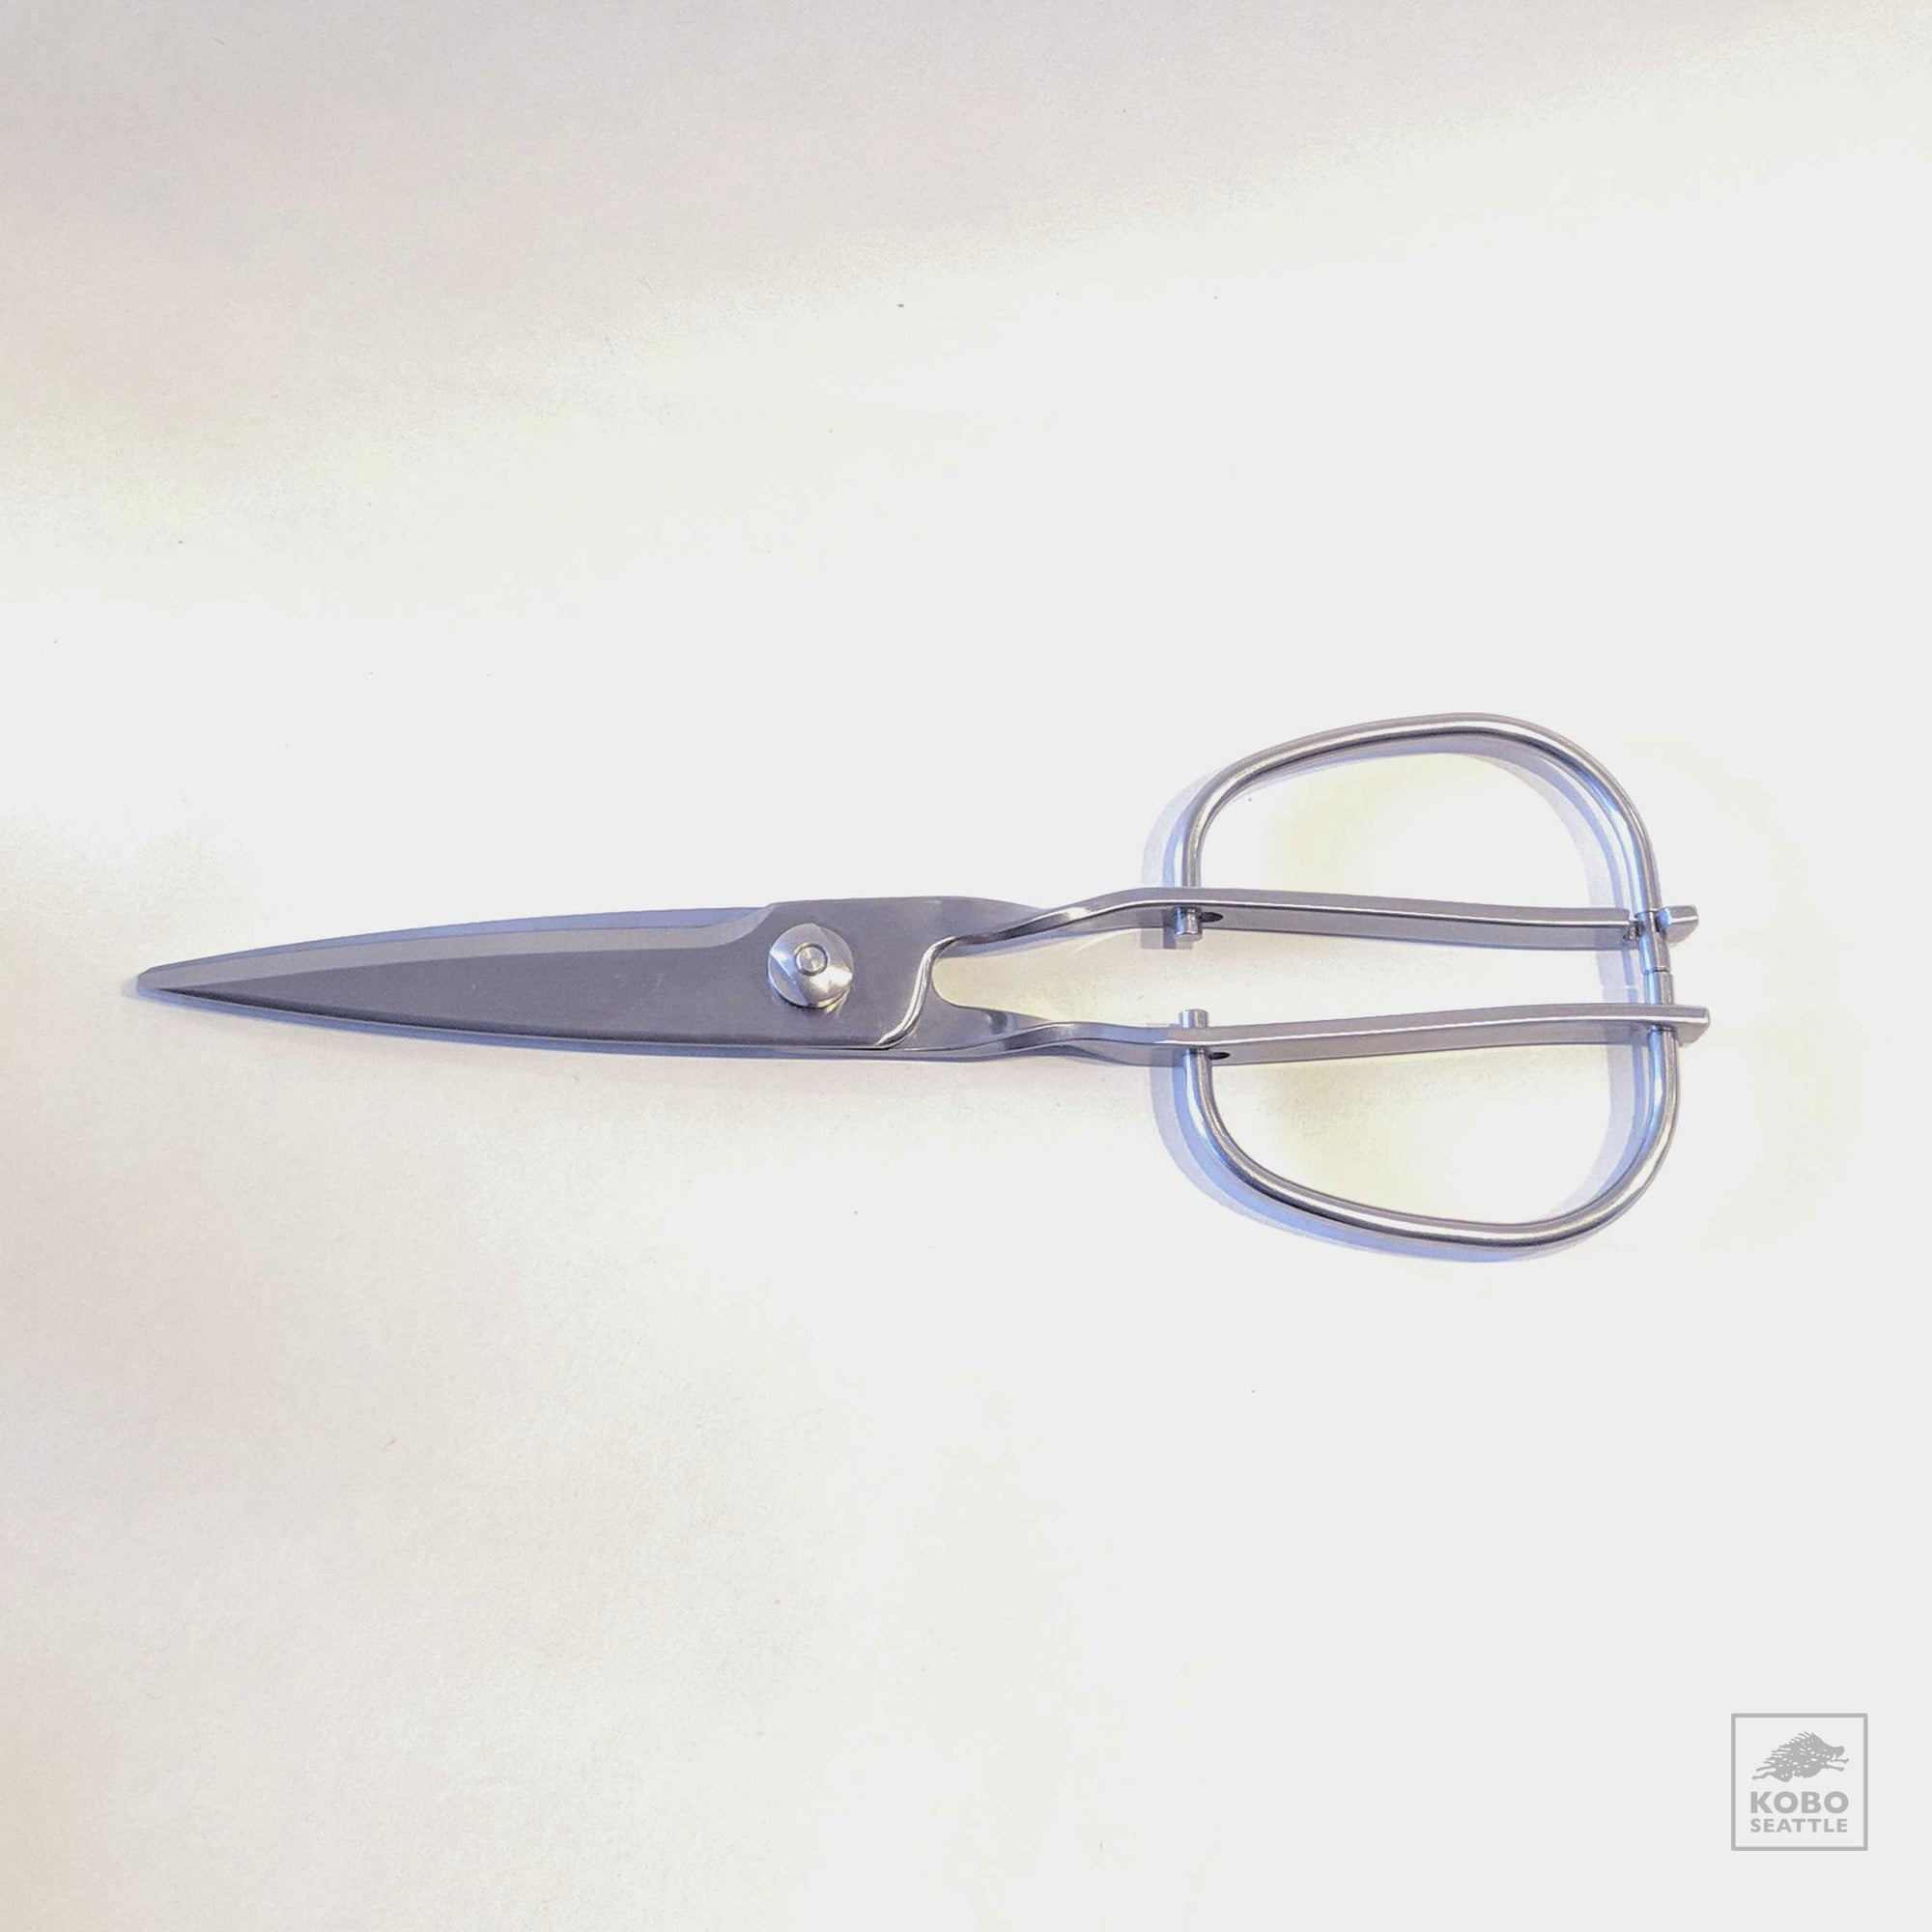 Thread Scissors - KoboSeattle